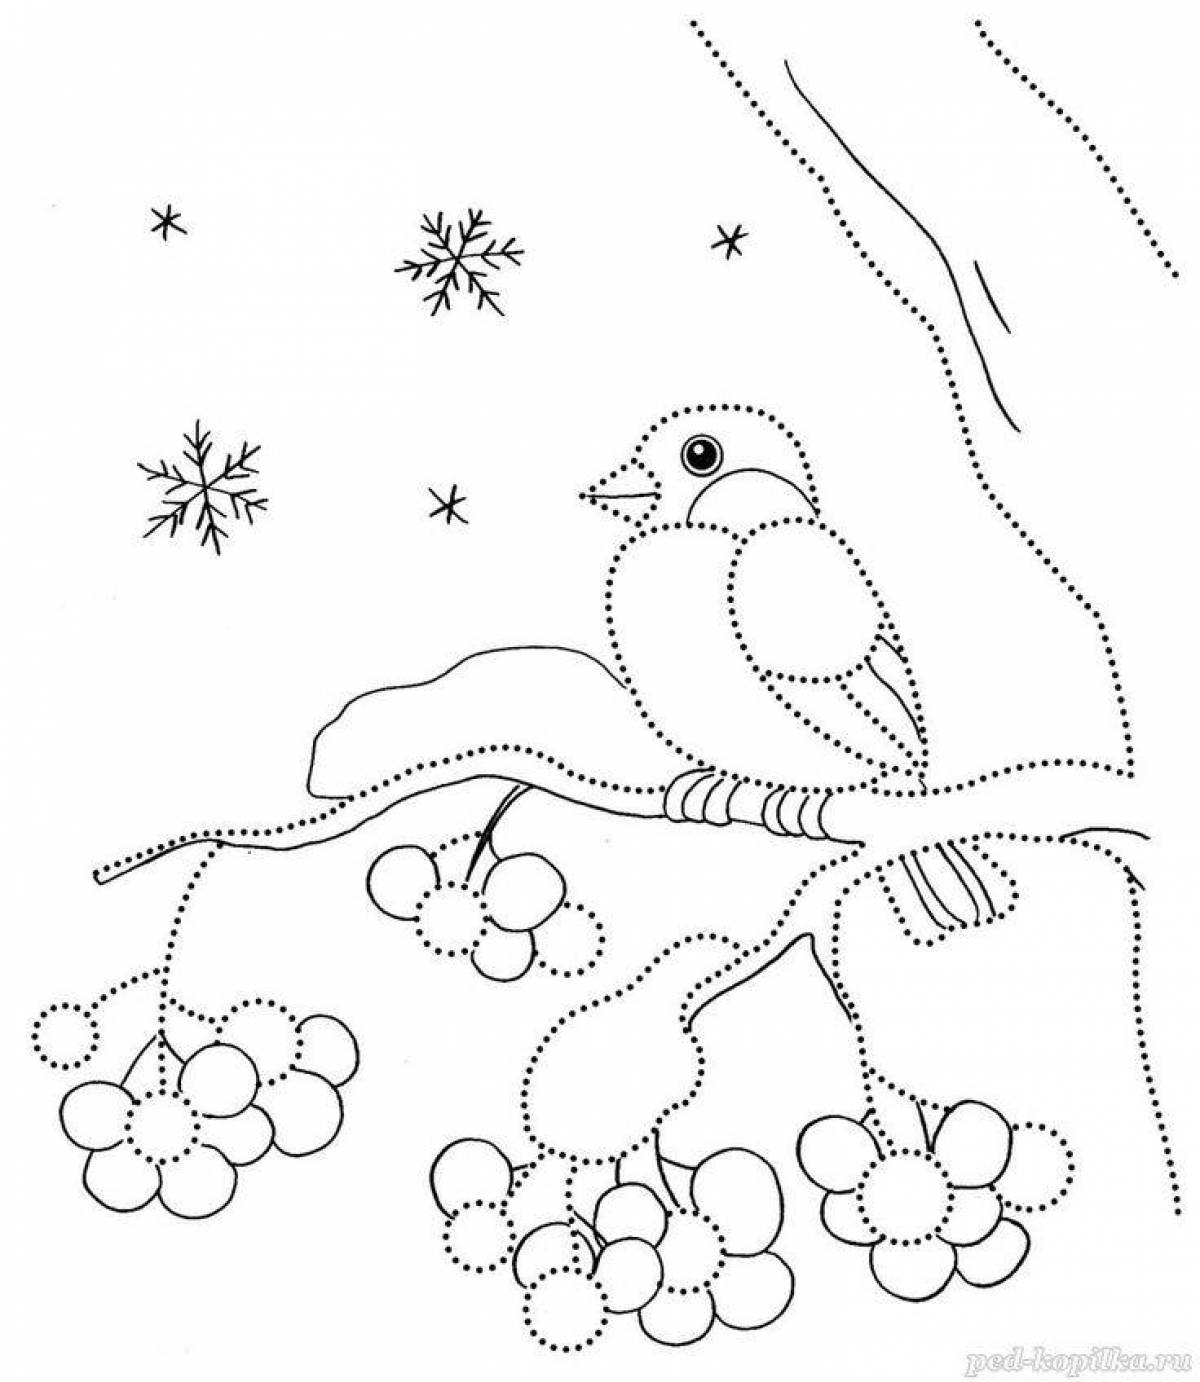 Exquisite winter birds coloring book